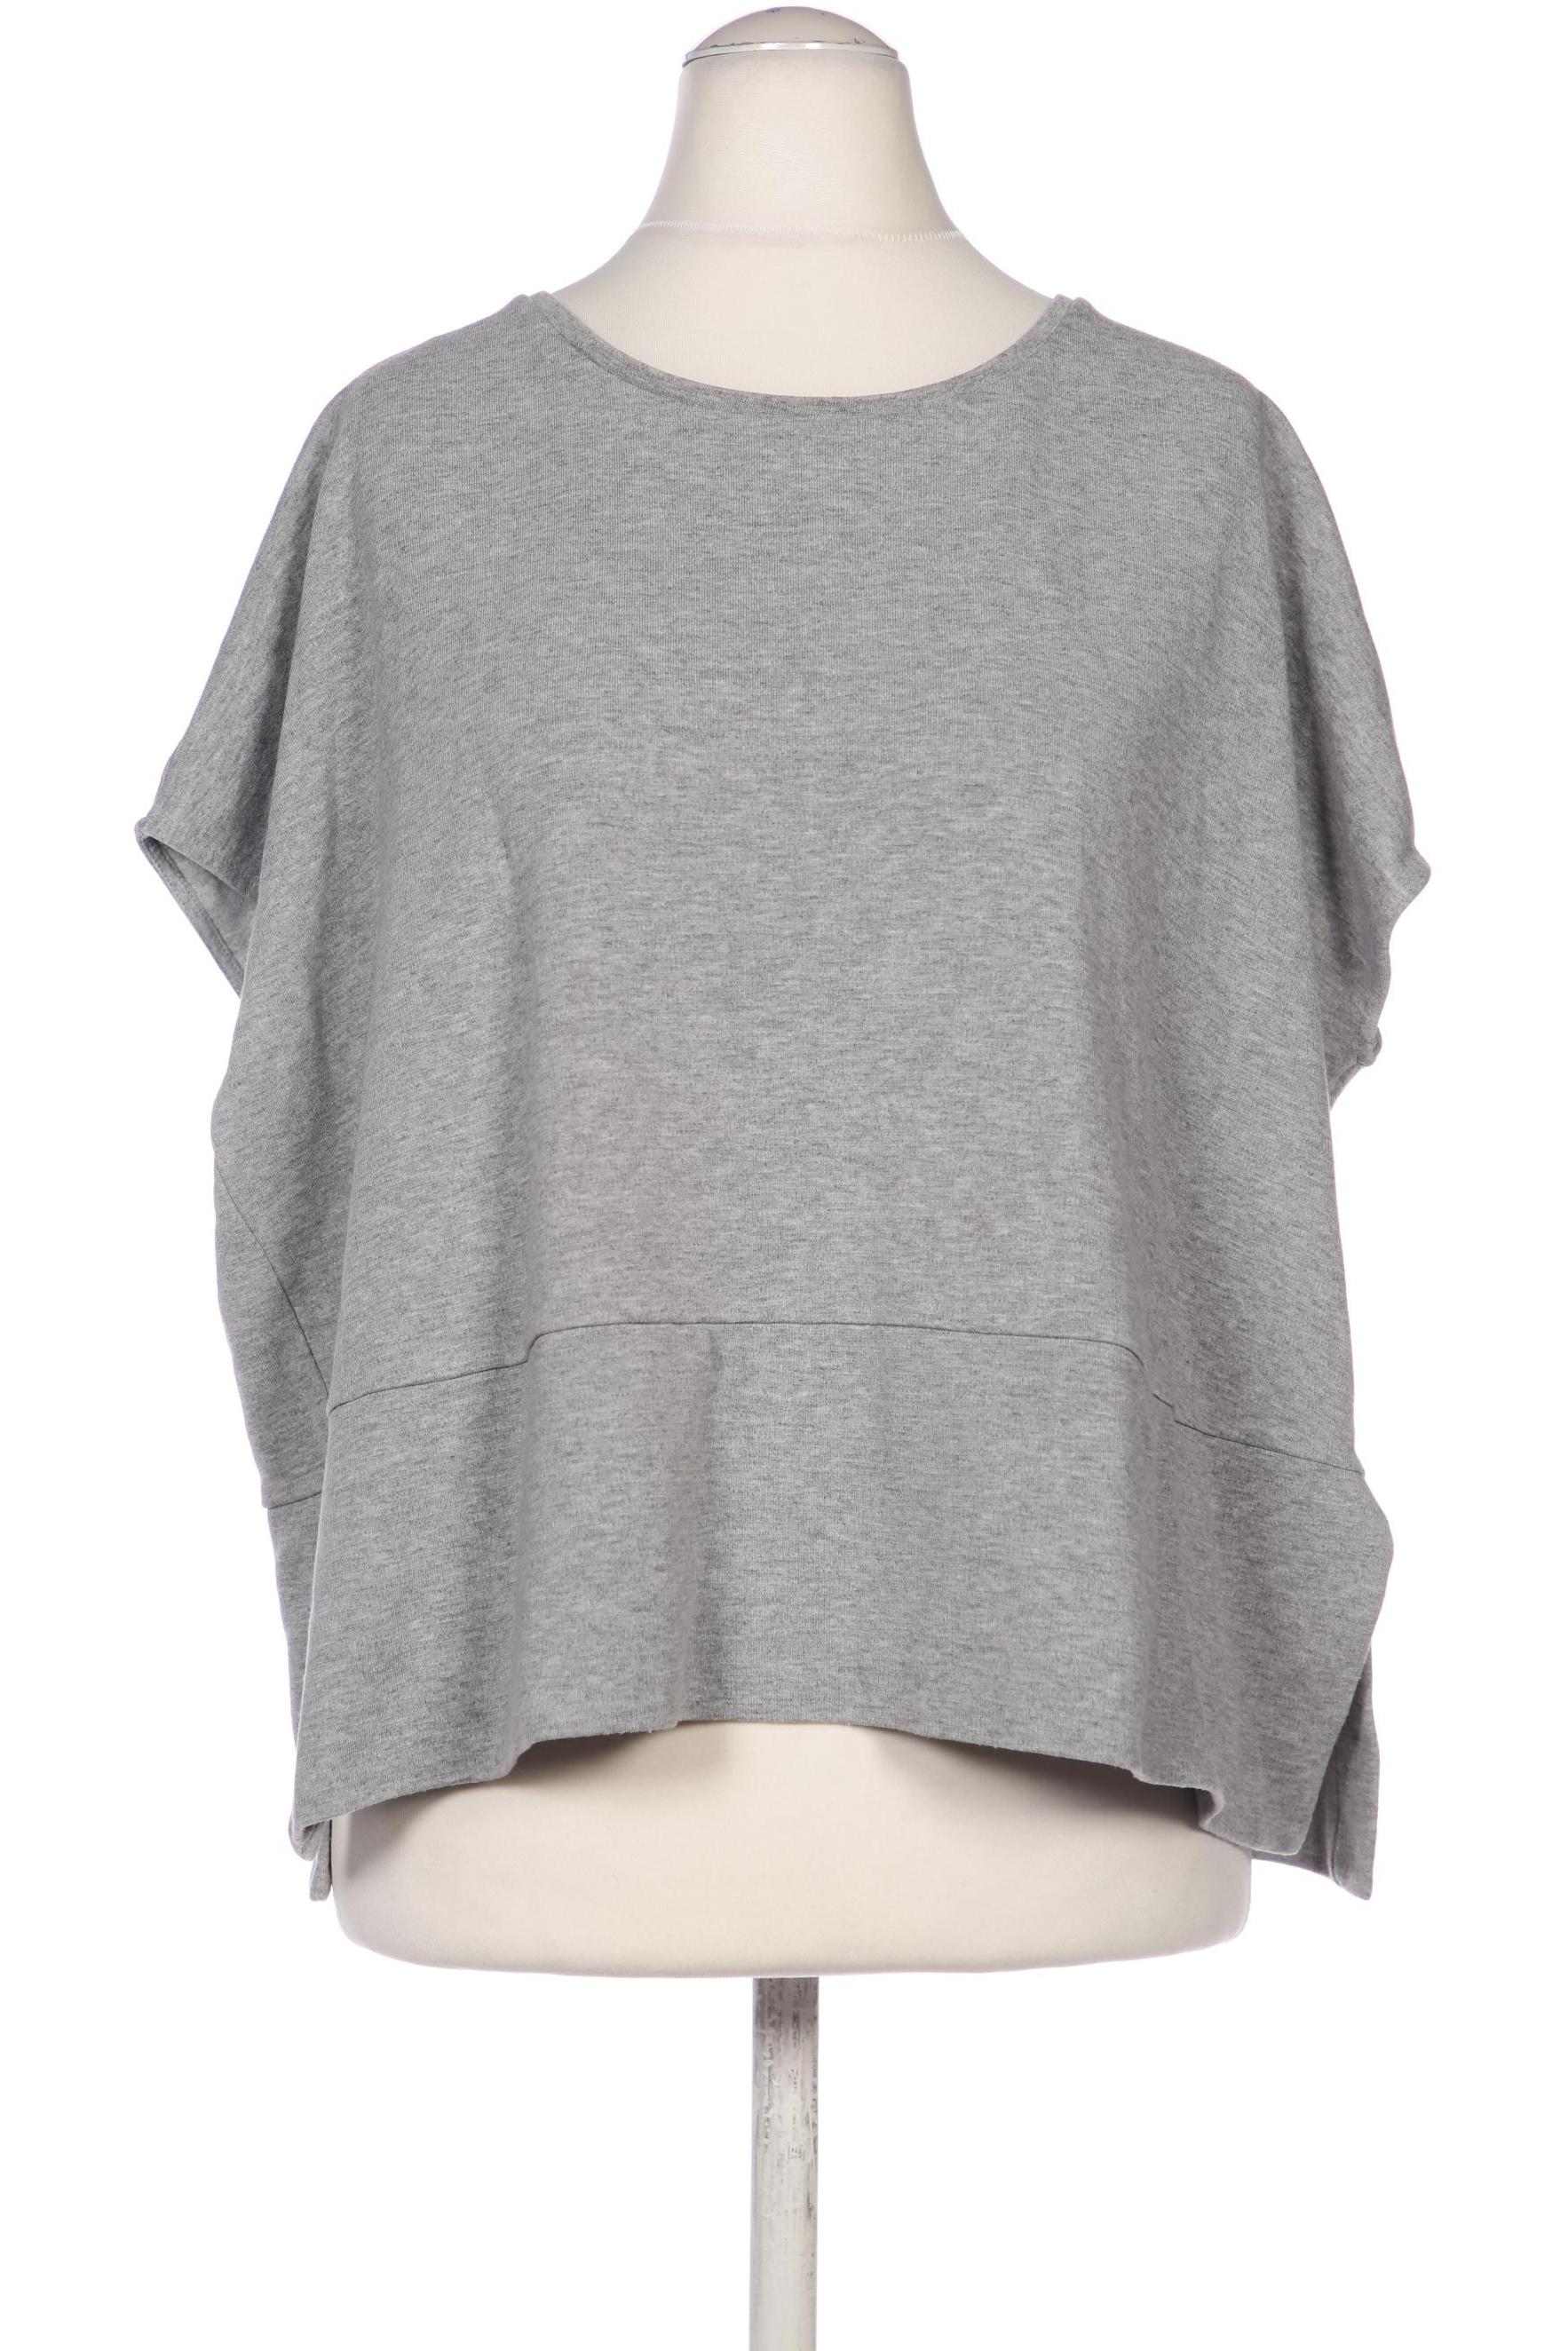 COS Damen T-Shirt, grau, Gr. 36 von COS